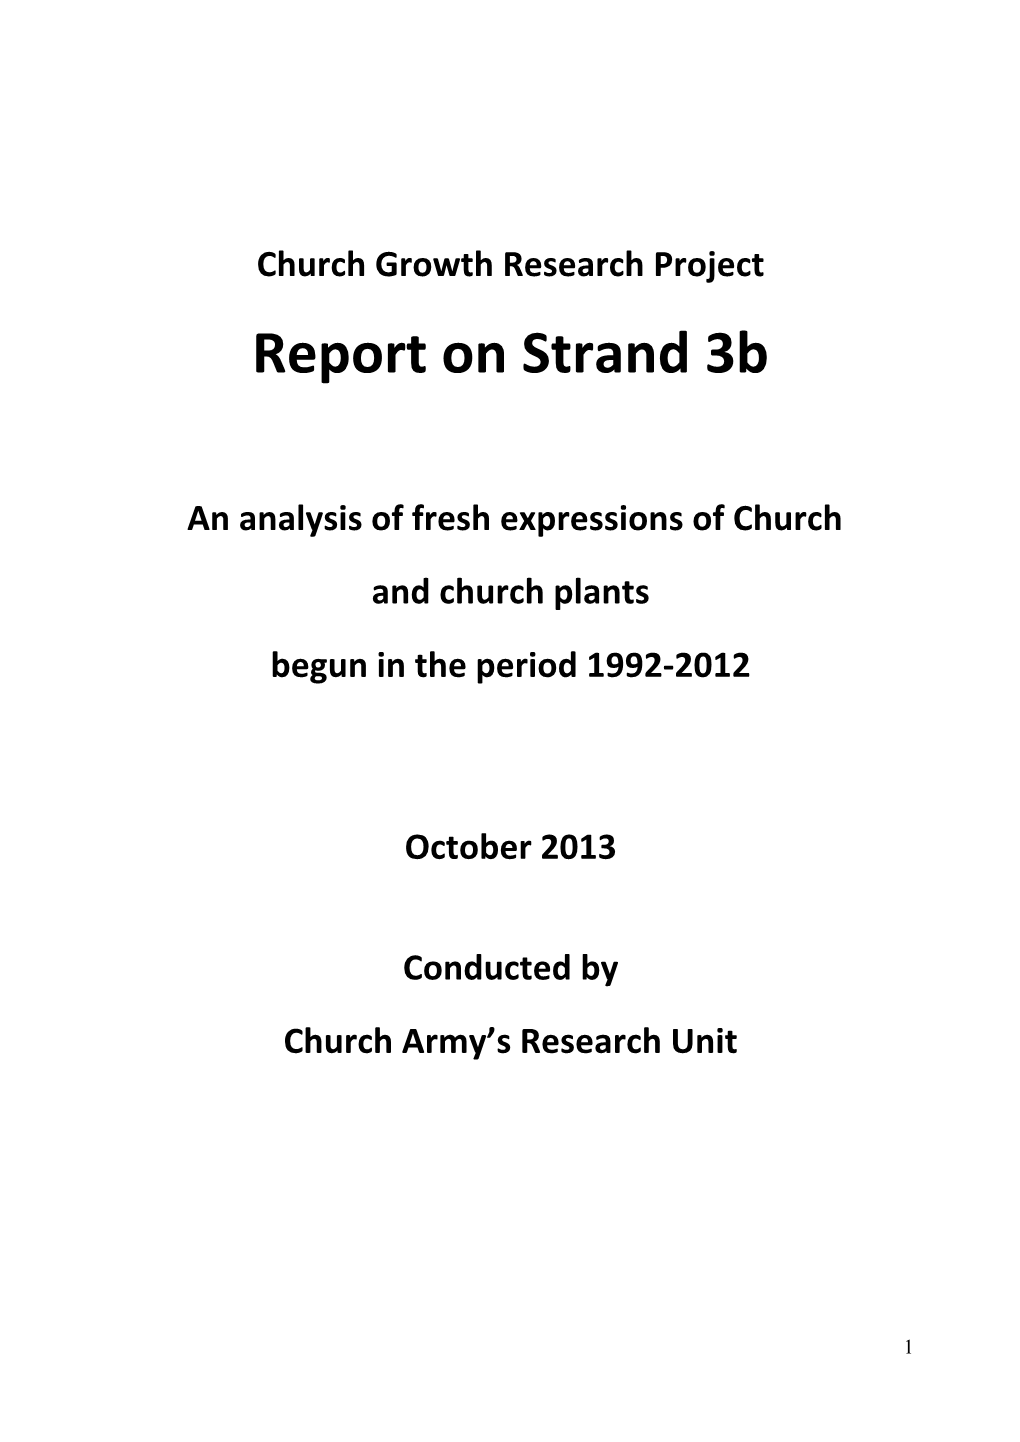 Report on Strand 3B